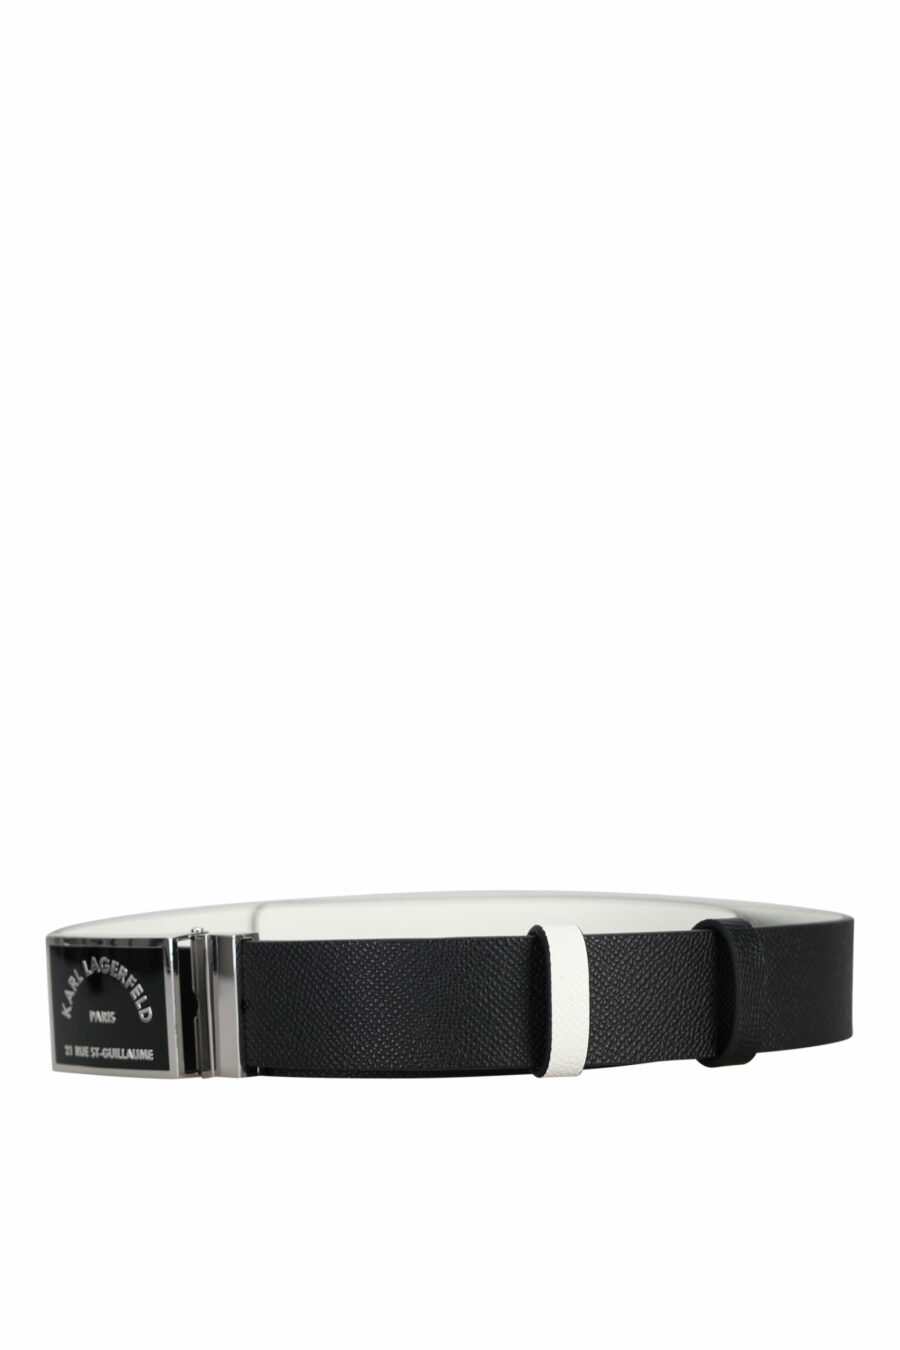 Cinturón reversible negro con logo "rue st guillaume" en placa - 8720744416890 1 scaled